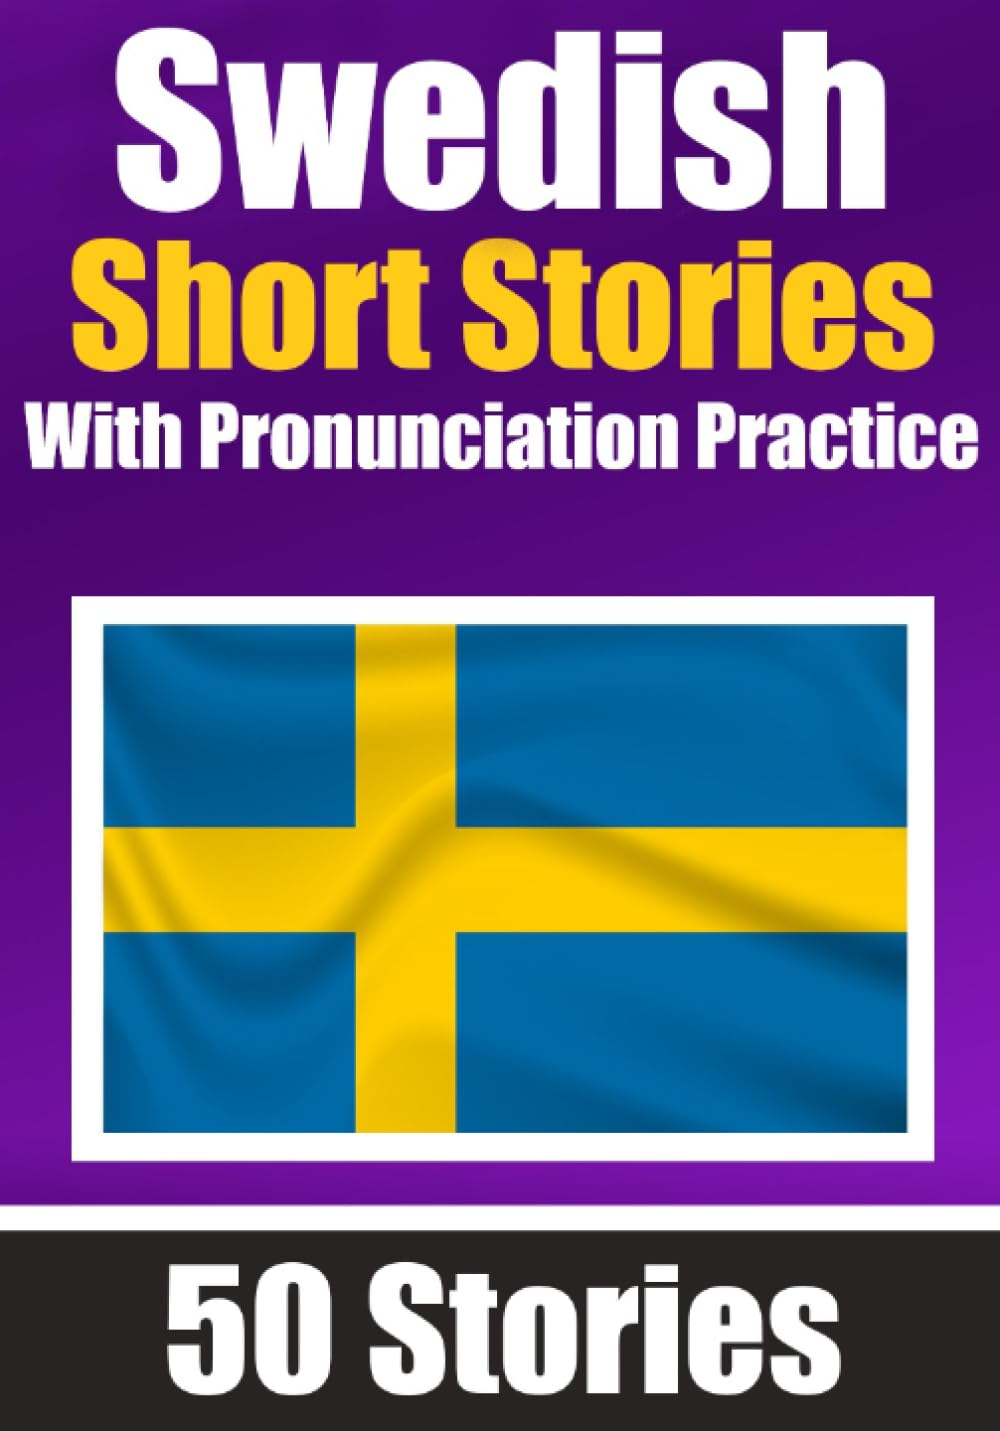 50 Short Stories in Swedish with Pronunciation Practice - Skriuwer.com